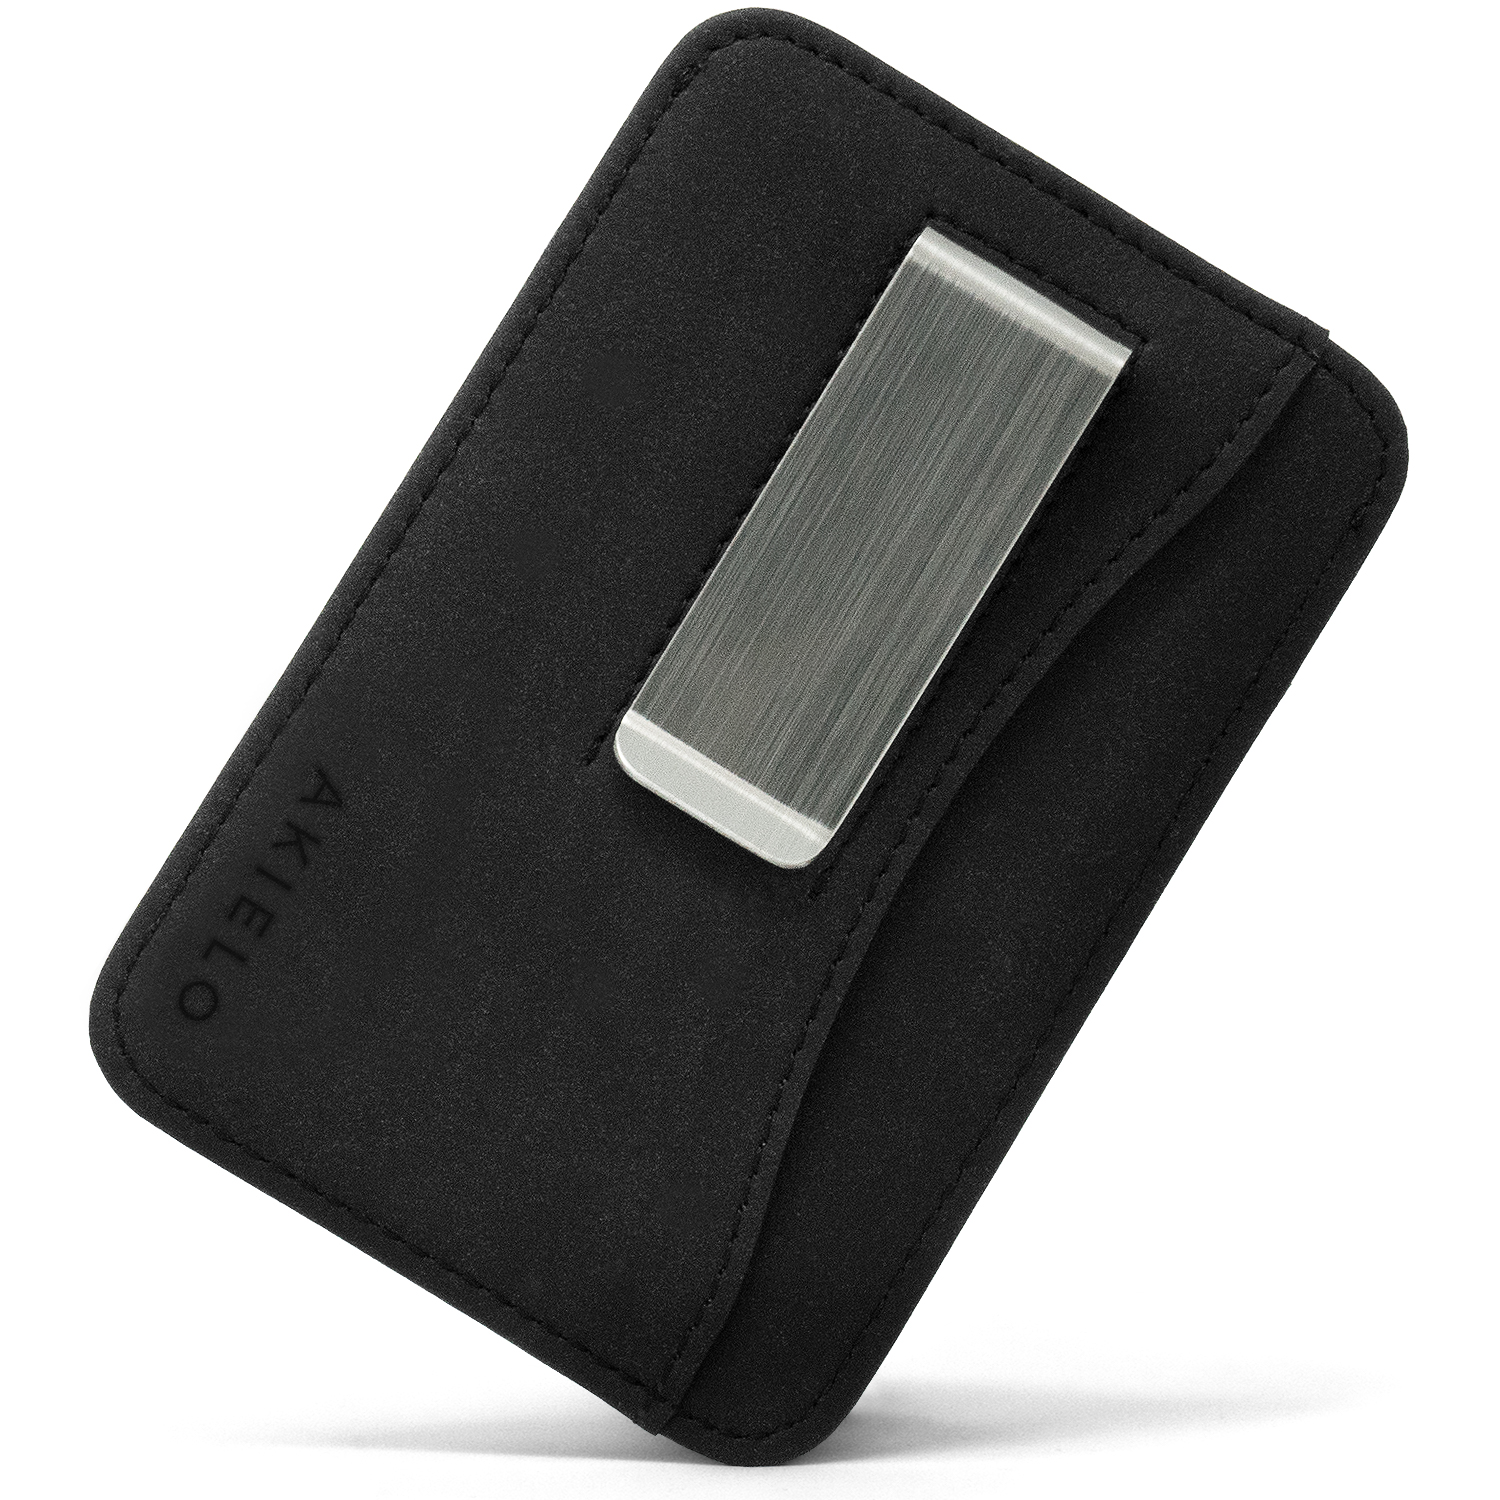 Black RFID blocking credit card holder wallet with Money Clip